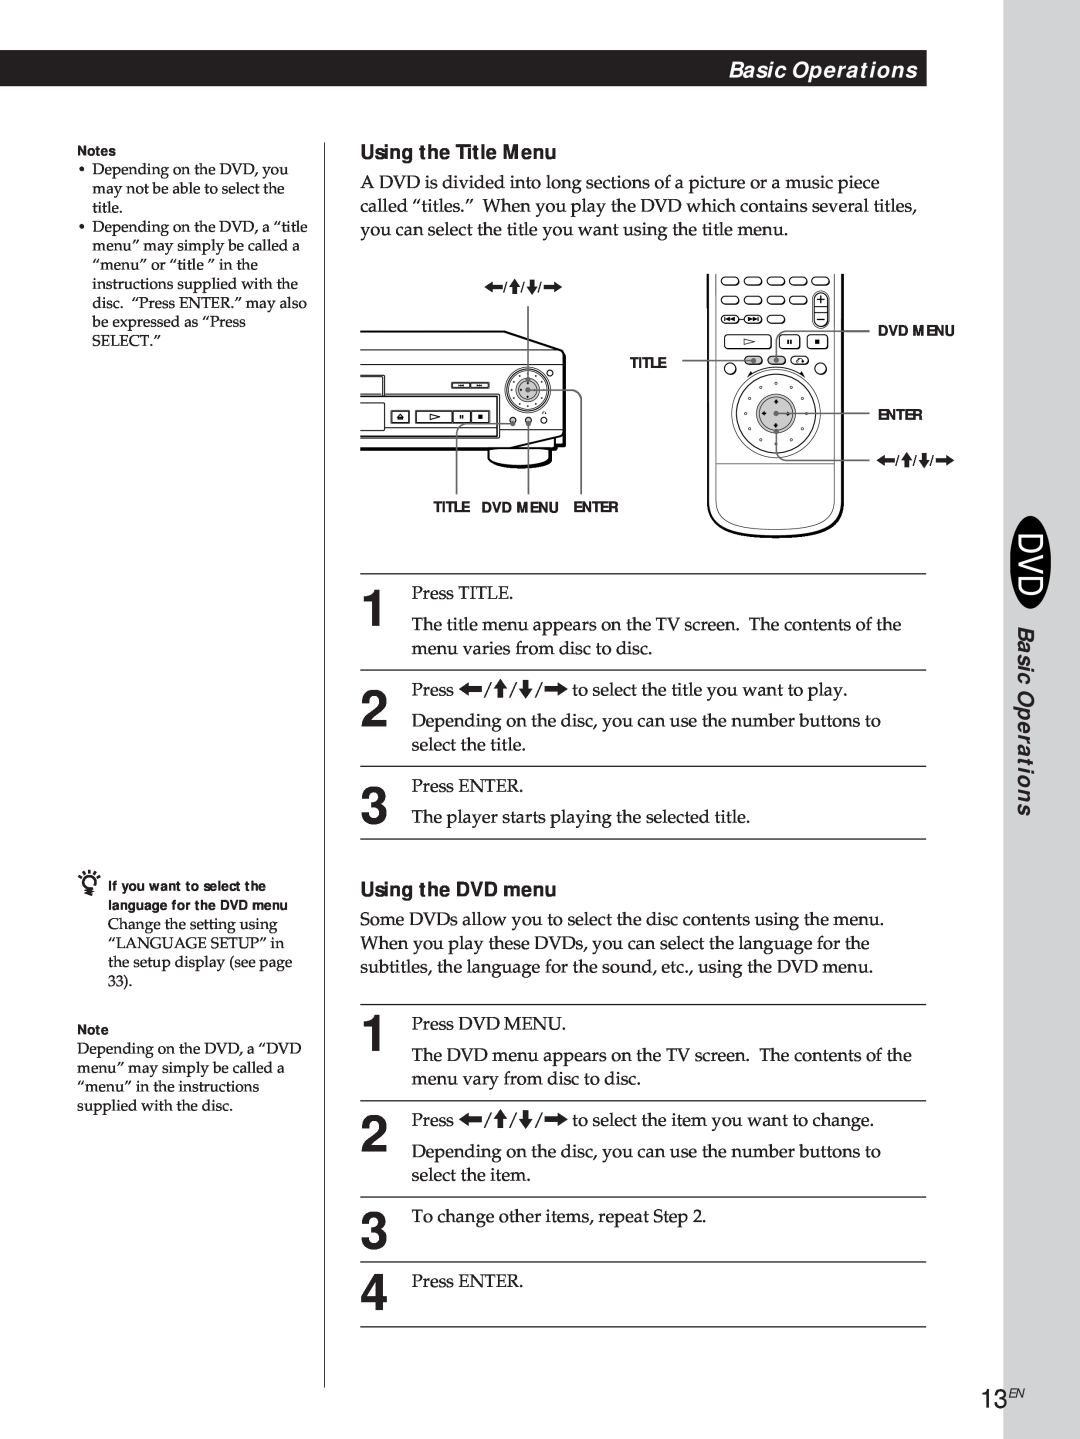 Sony DVP-S500D manual 13EN, Using the Title Menu, Using the DVD menu, Basic Operations 